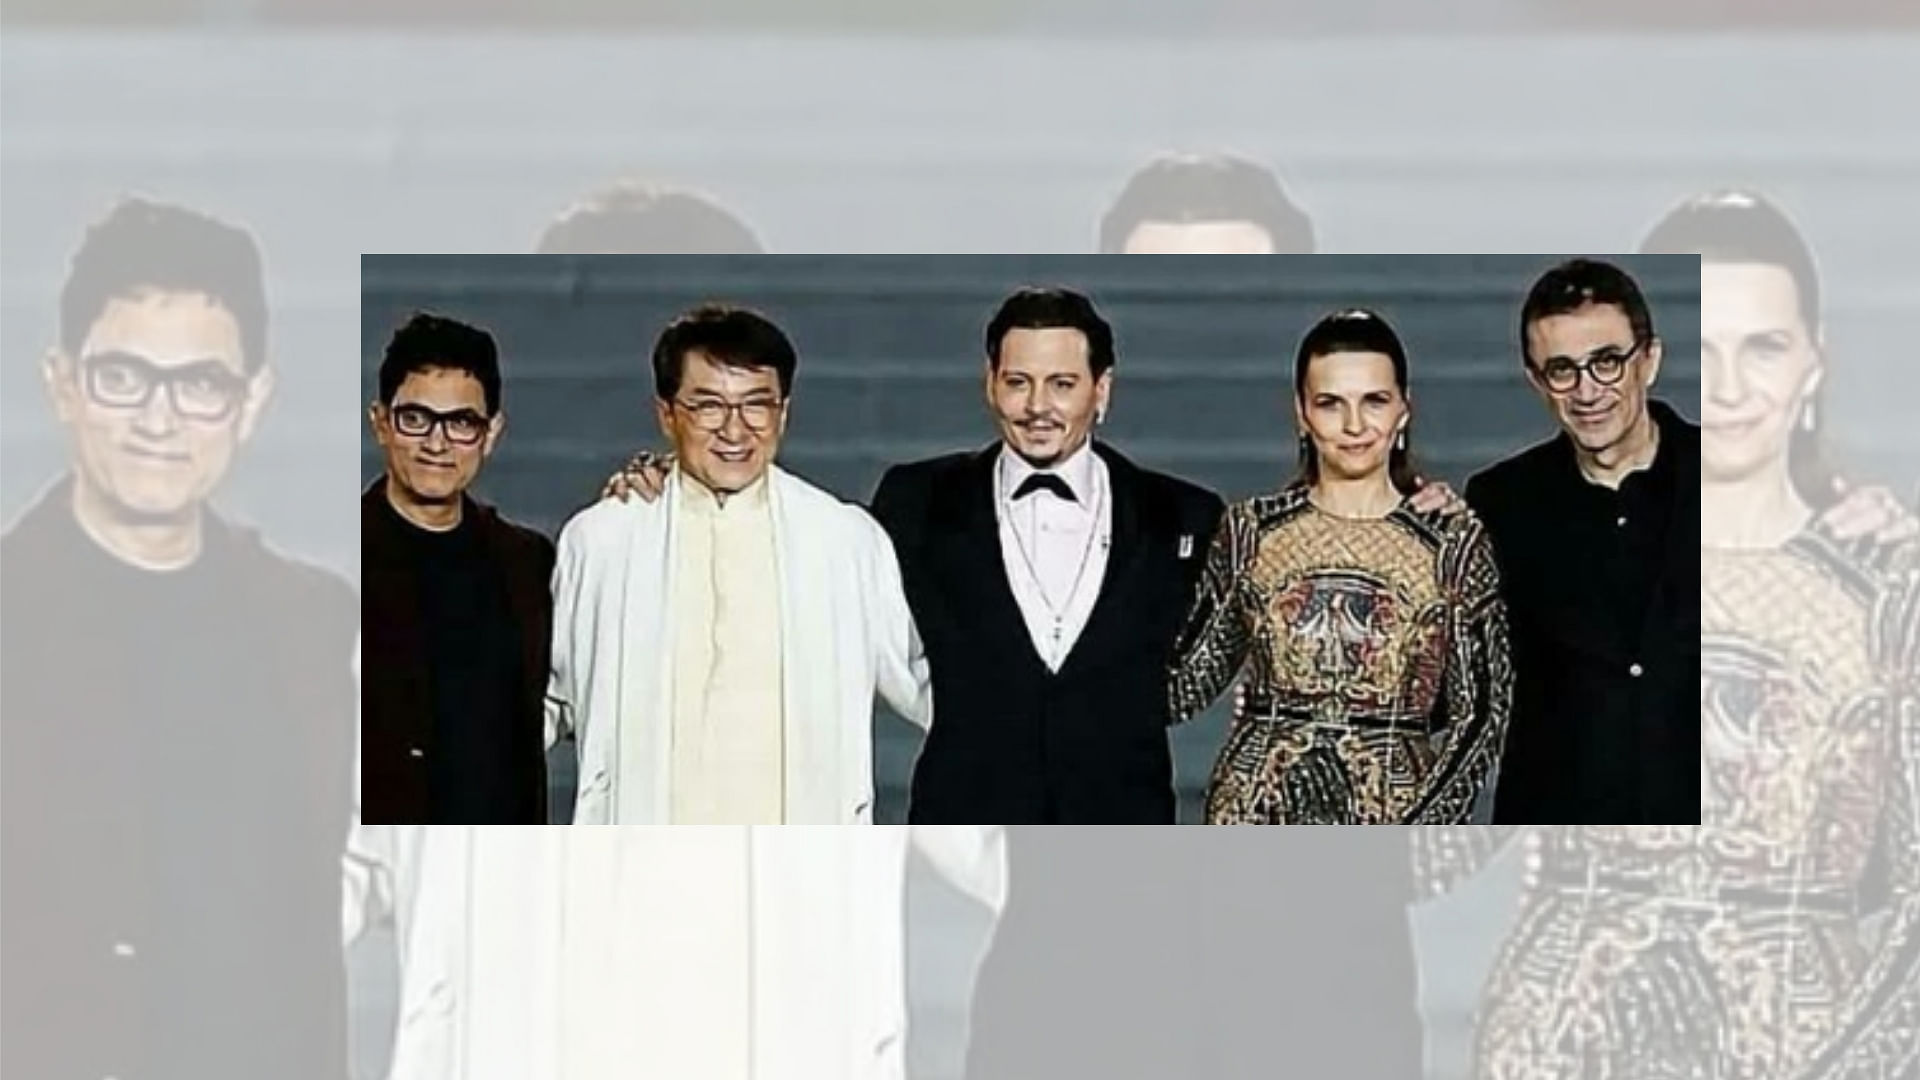 Aamir Khan shares the dais with international cinema bigwigs like Johnny Depp, Jackie Chan, and even Turkish filmmaker, Nuri Bilge Ceylan.